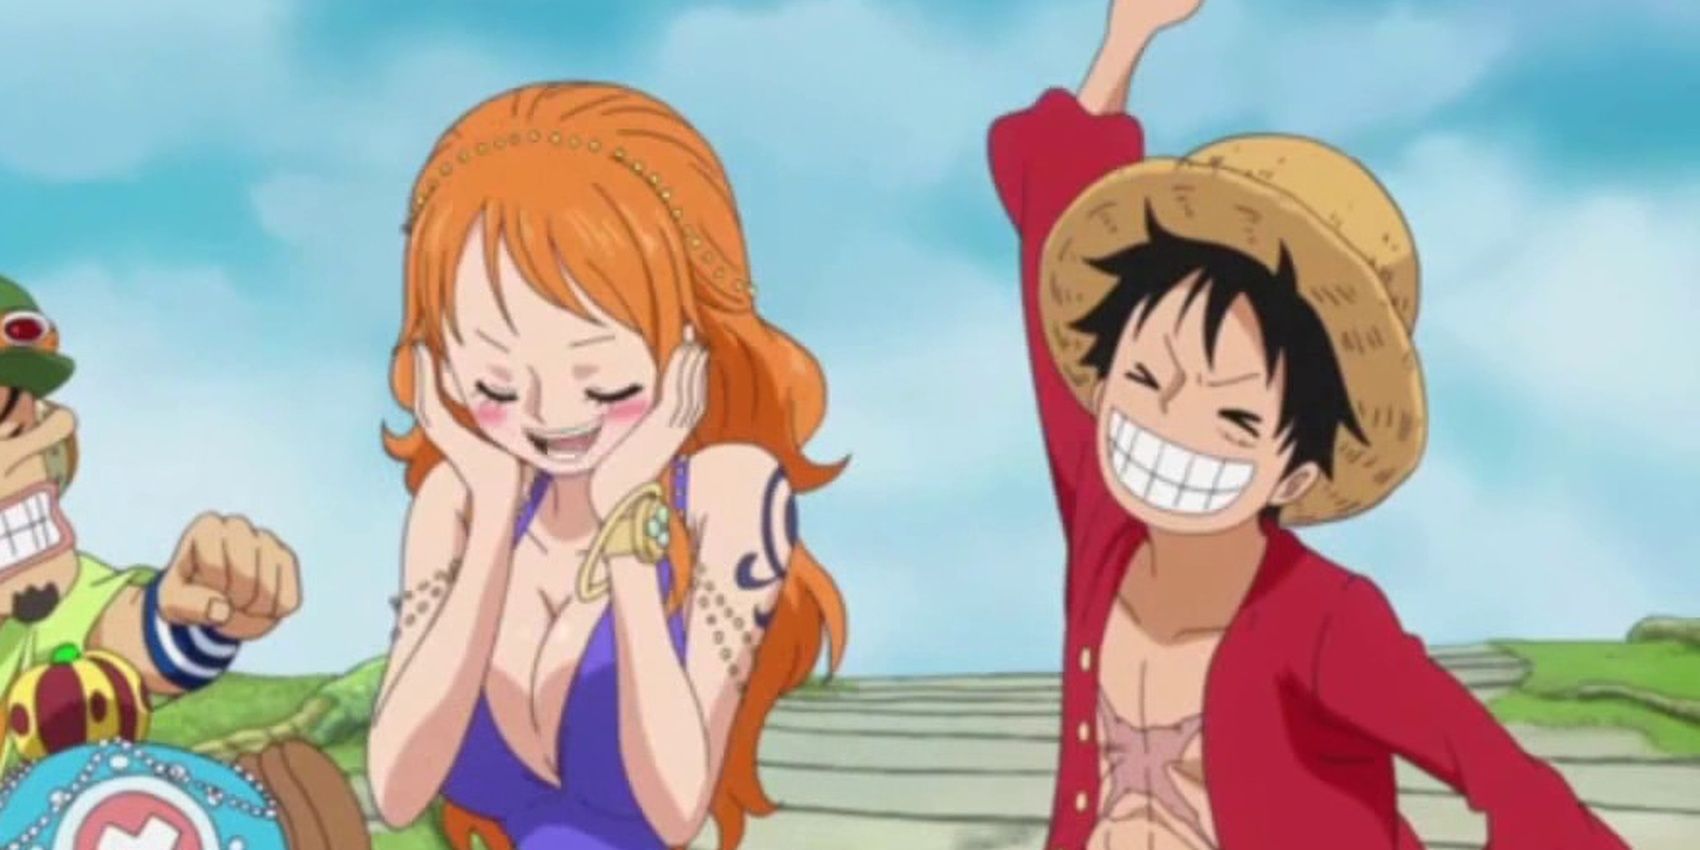 Nami blushing with Luffy grinning behind her